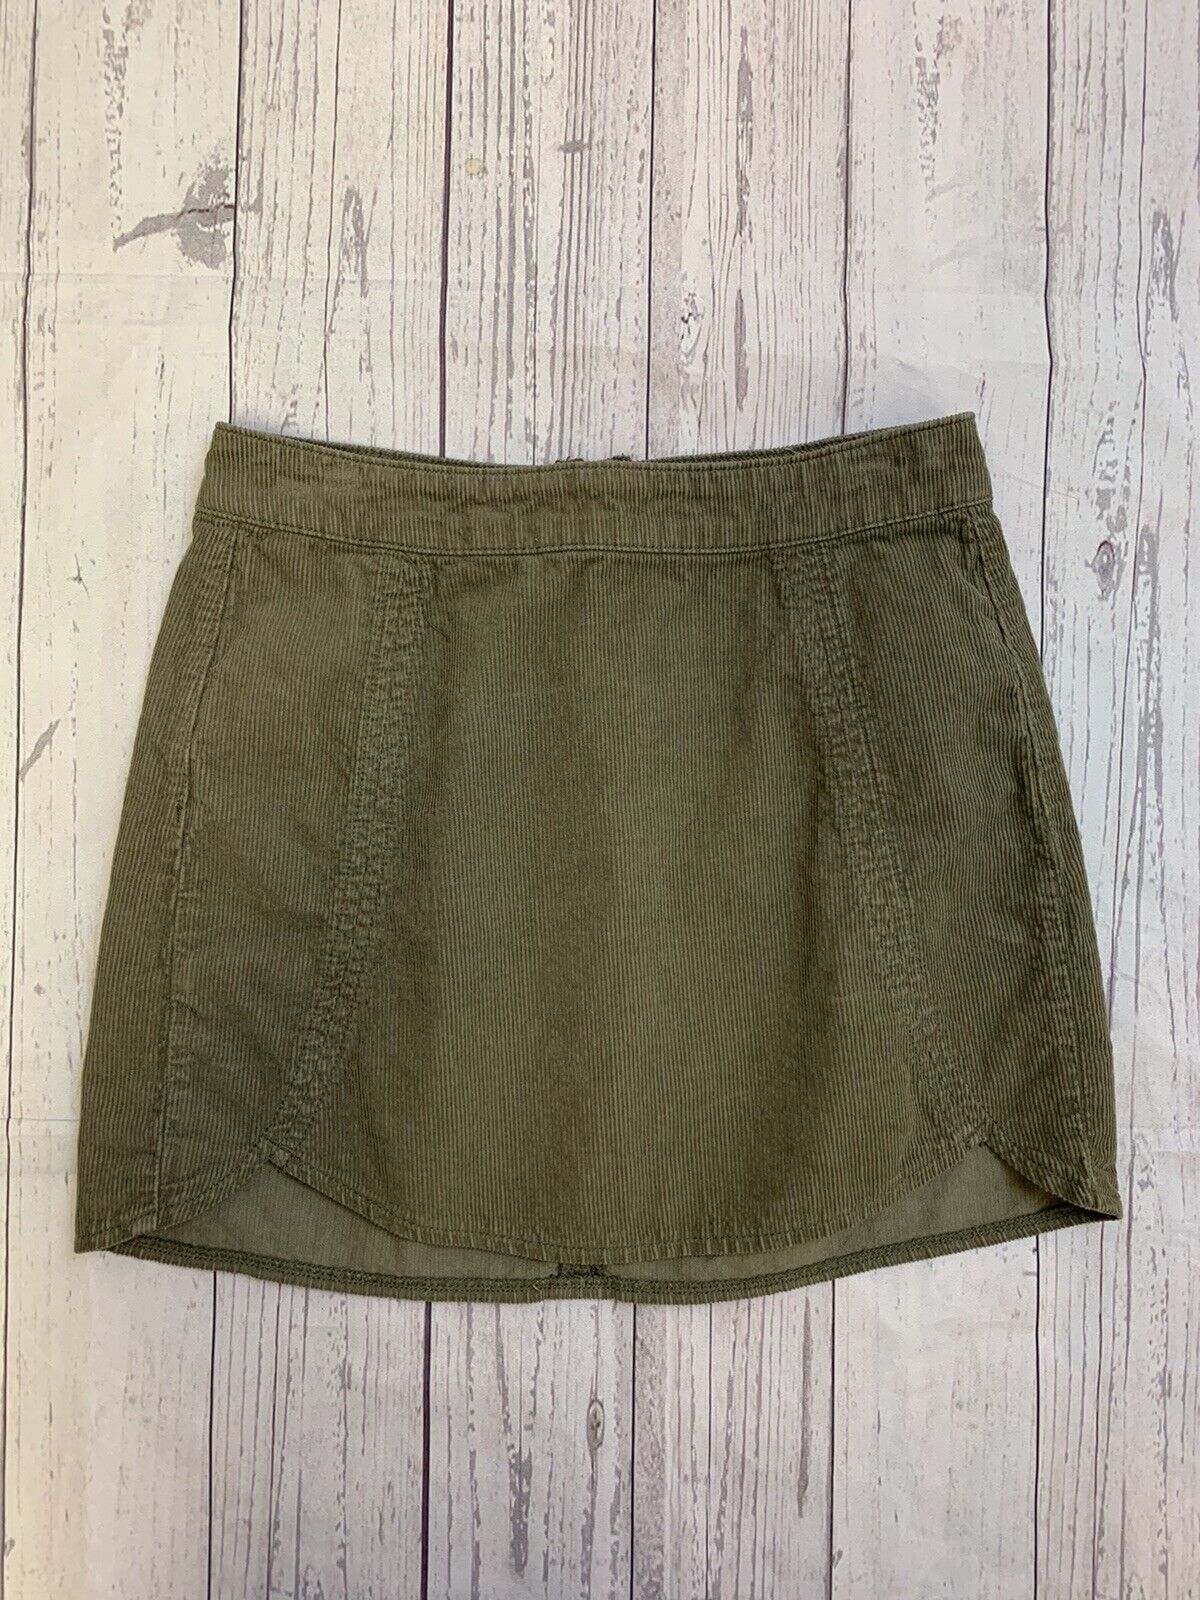 Pacsun Green Corduroy Skirt Size 25